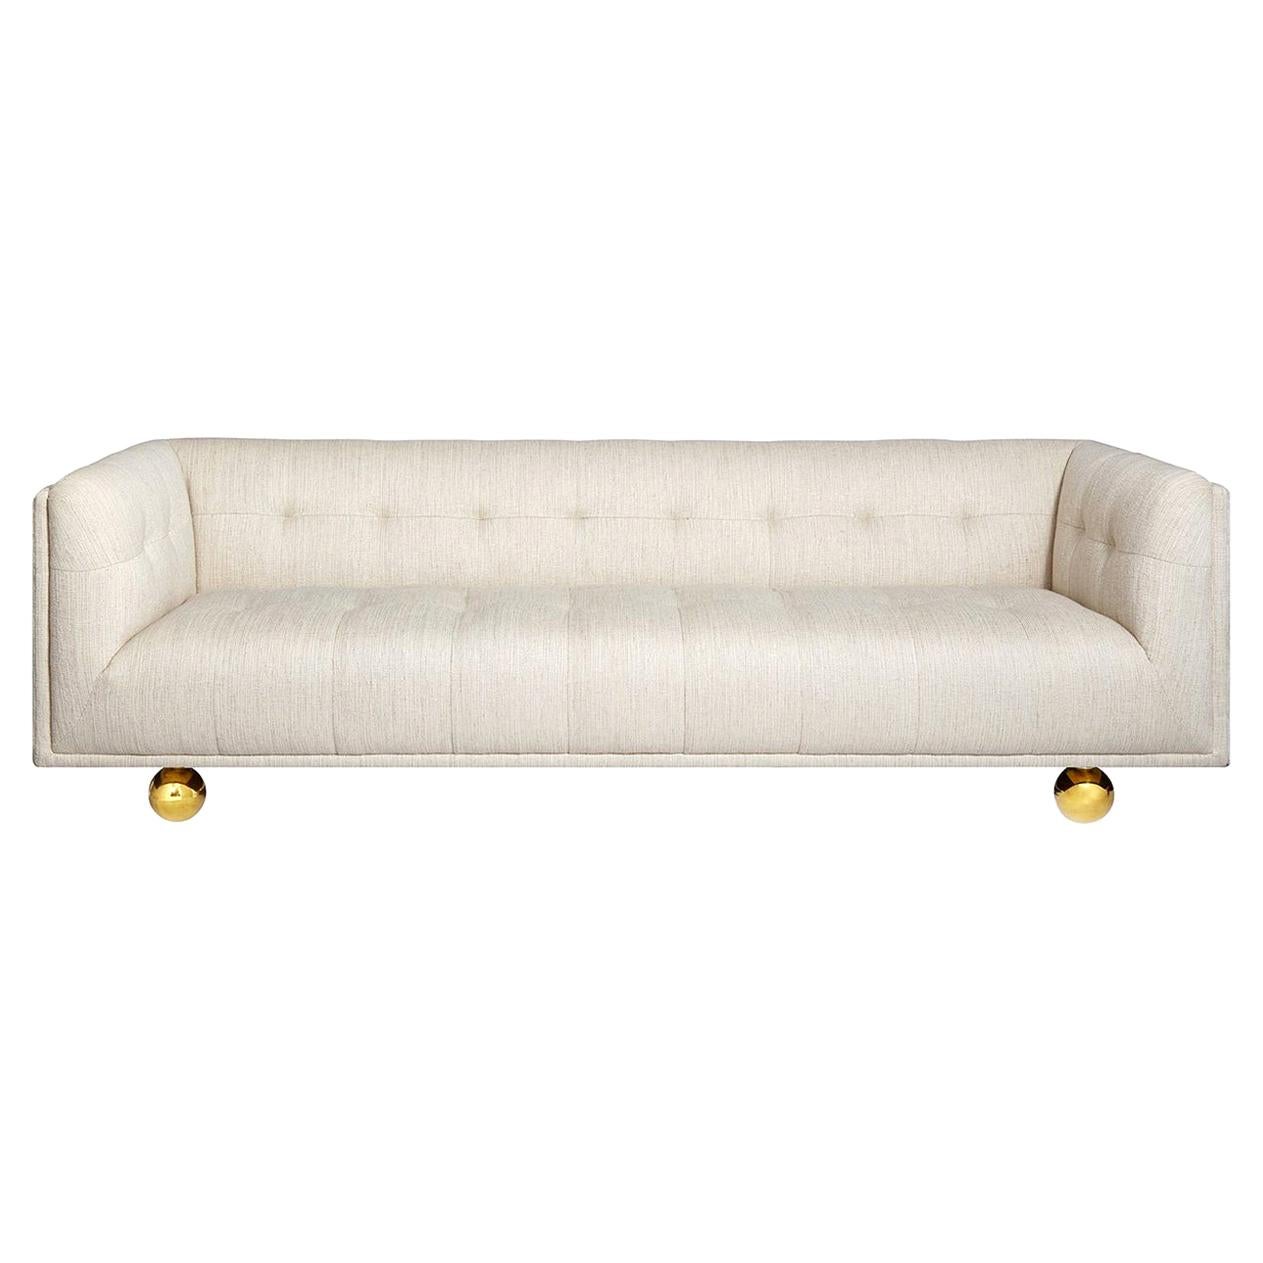 Claridge Modern Chesterfield Sofa in Ivory Linen